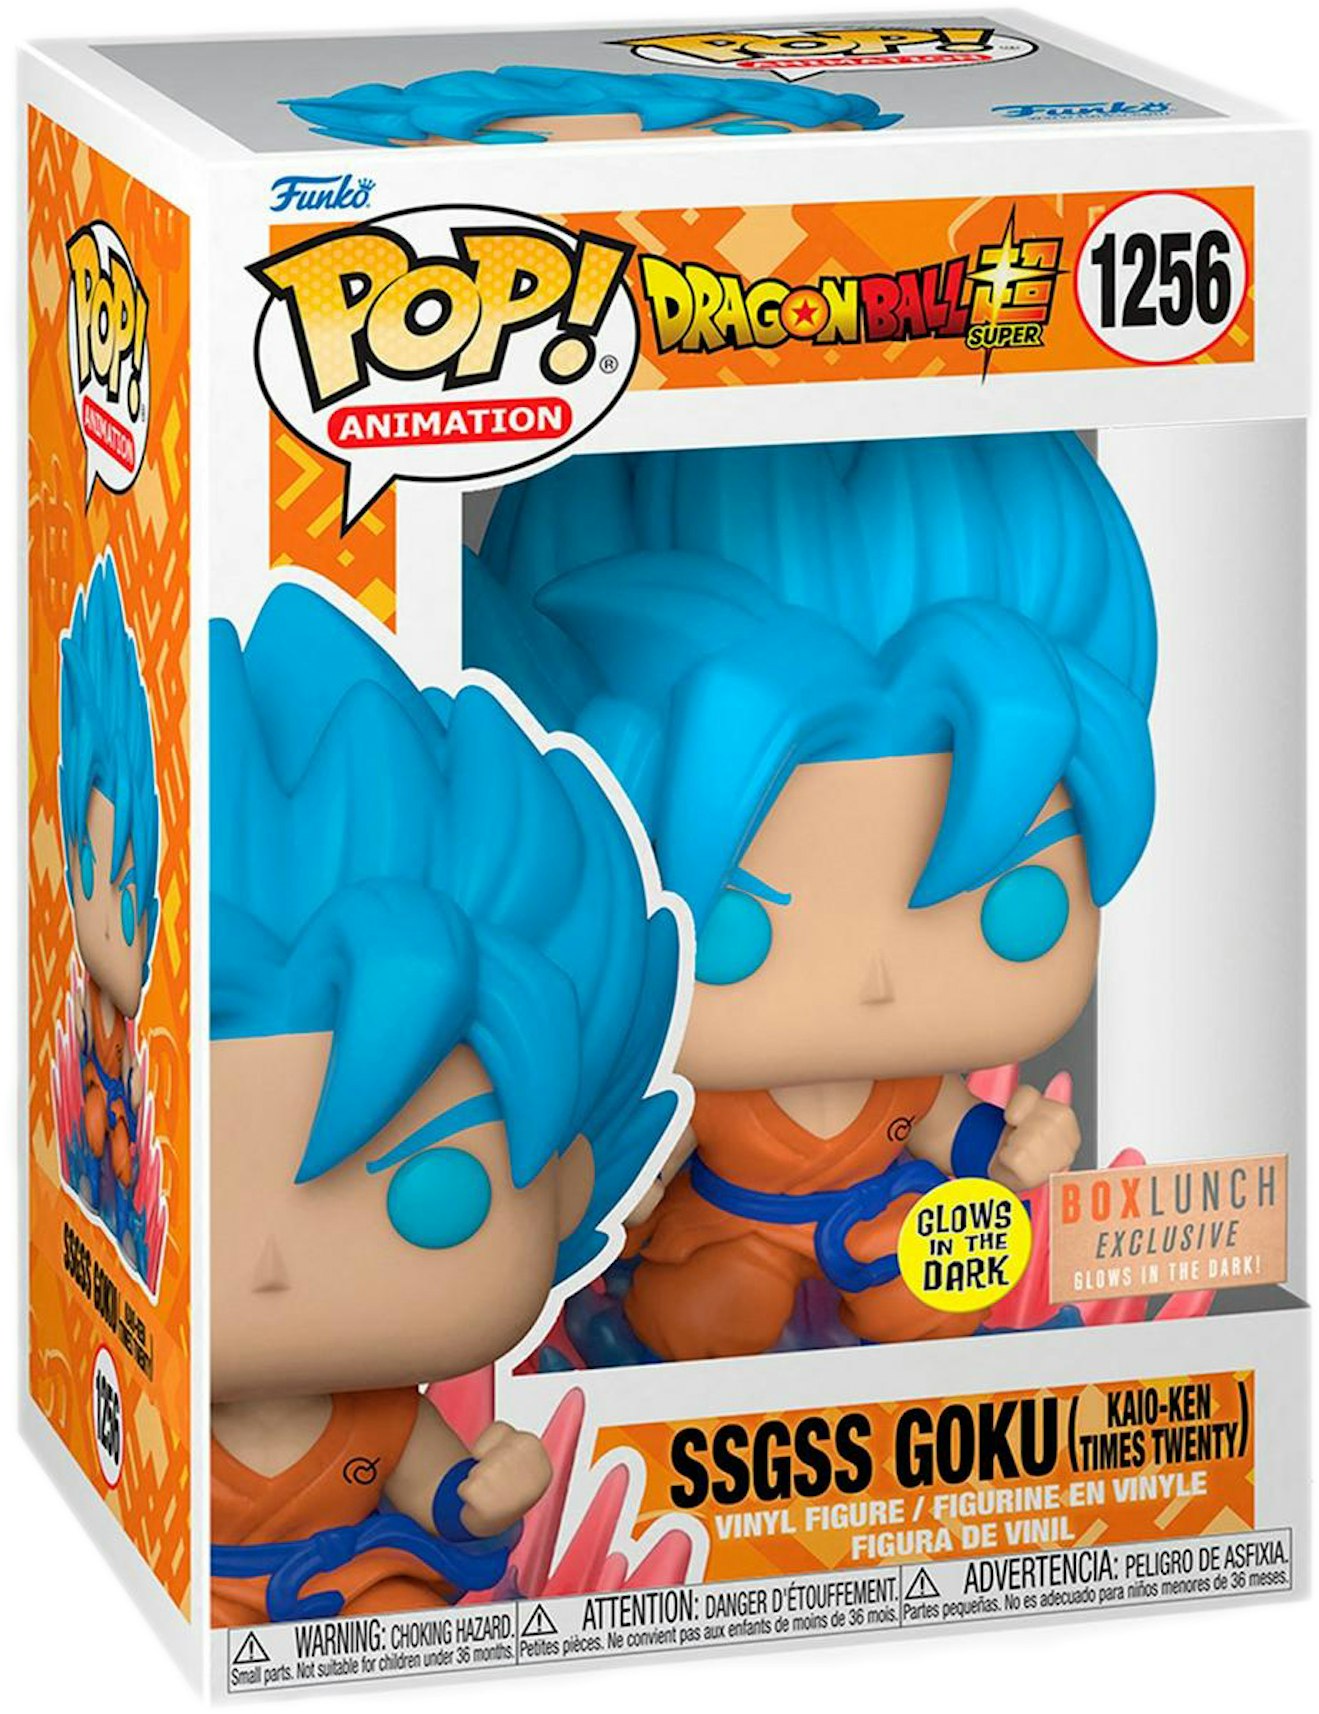 Lada constantemente germen Funko Pop! Animation Dragon Ball Z SSGSS Goku (Kaio-Ken Times Twenty) GITD  Box Lunch Exclusive Figure #1256 - US